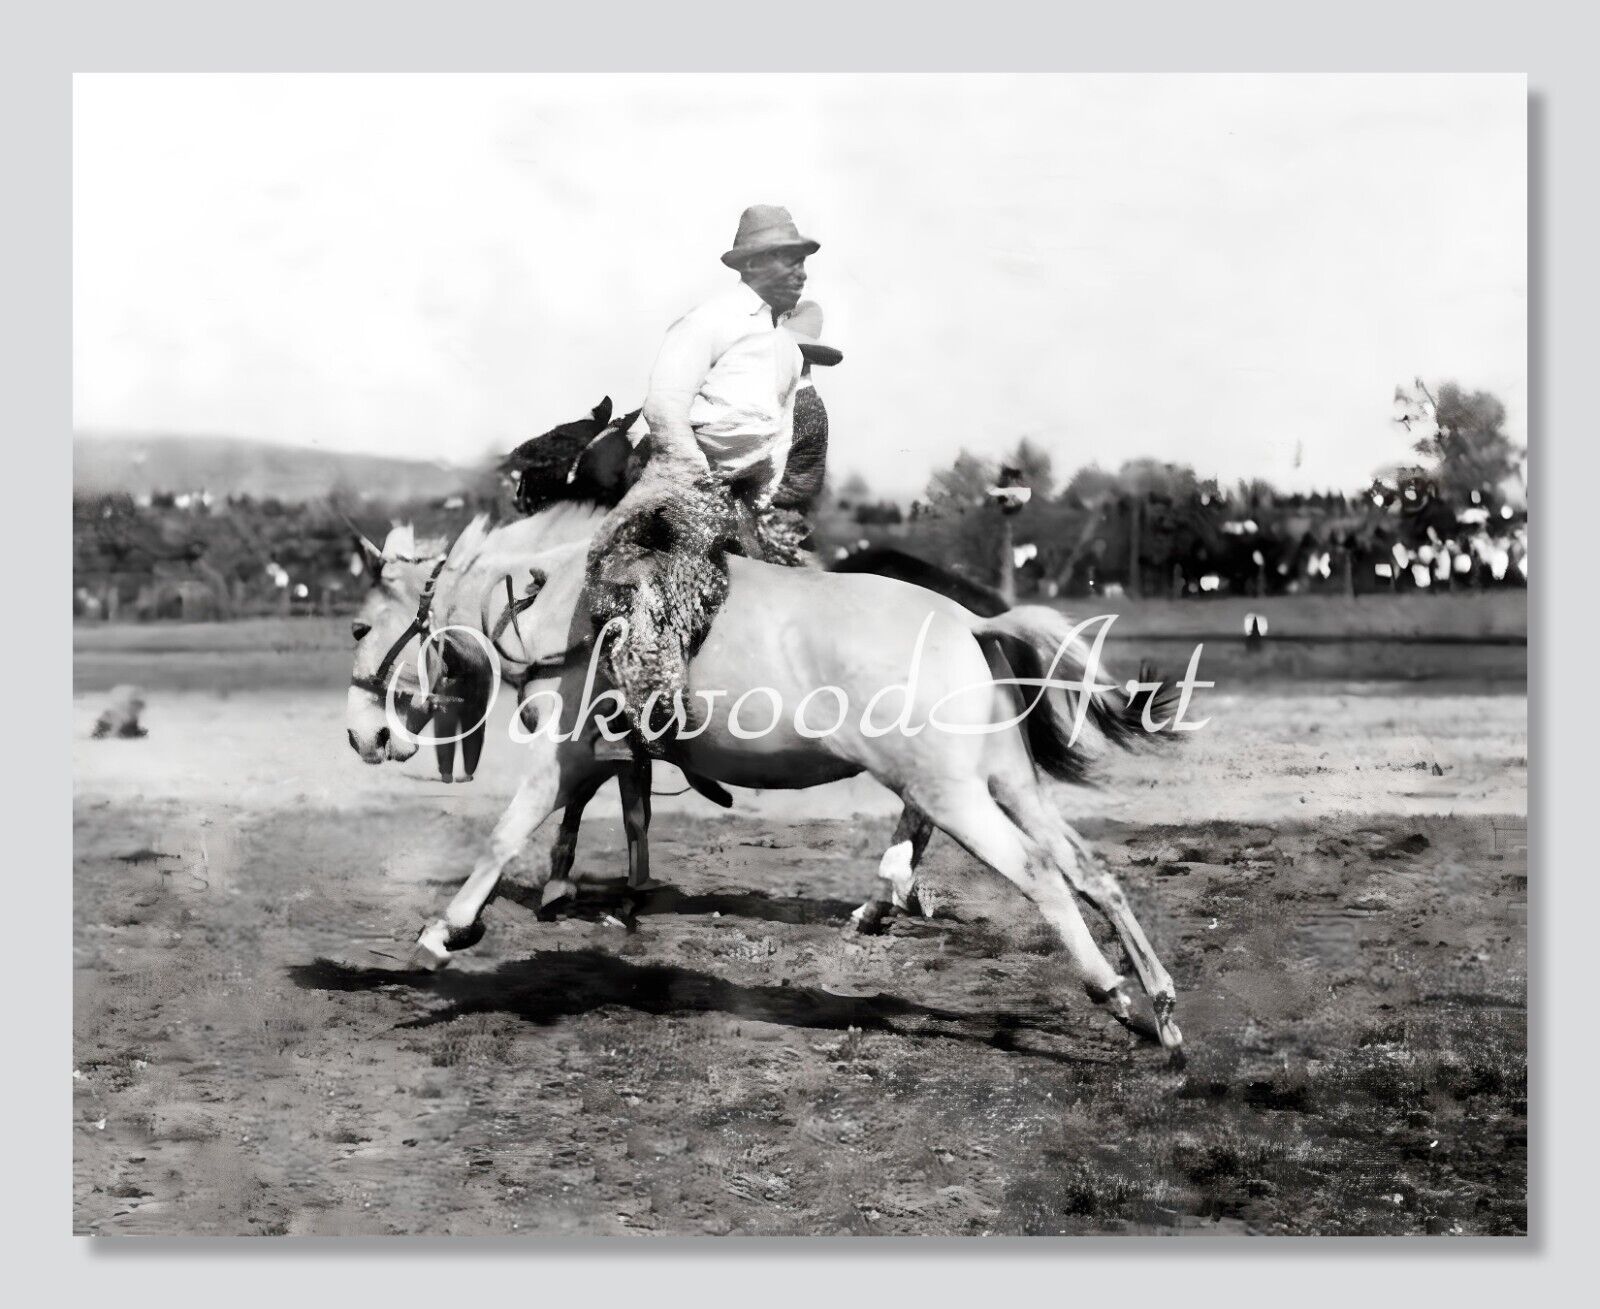 Rodeo Cowboy Riding Backwards on a Mule c1900s, Vintage Photo Reprint